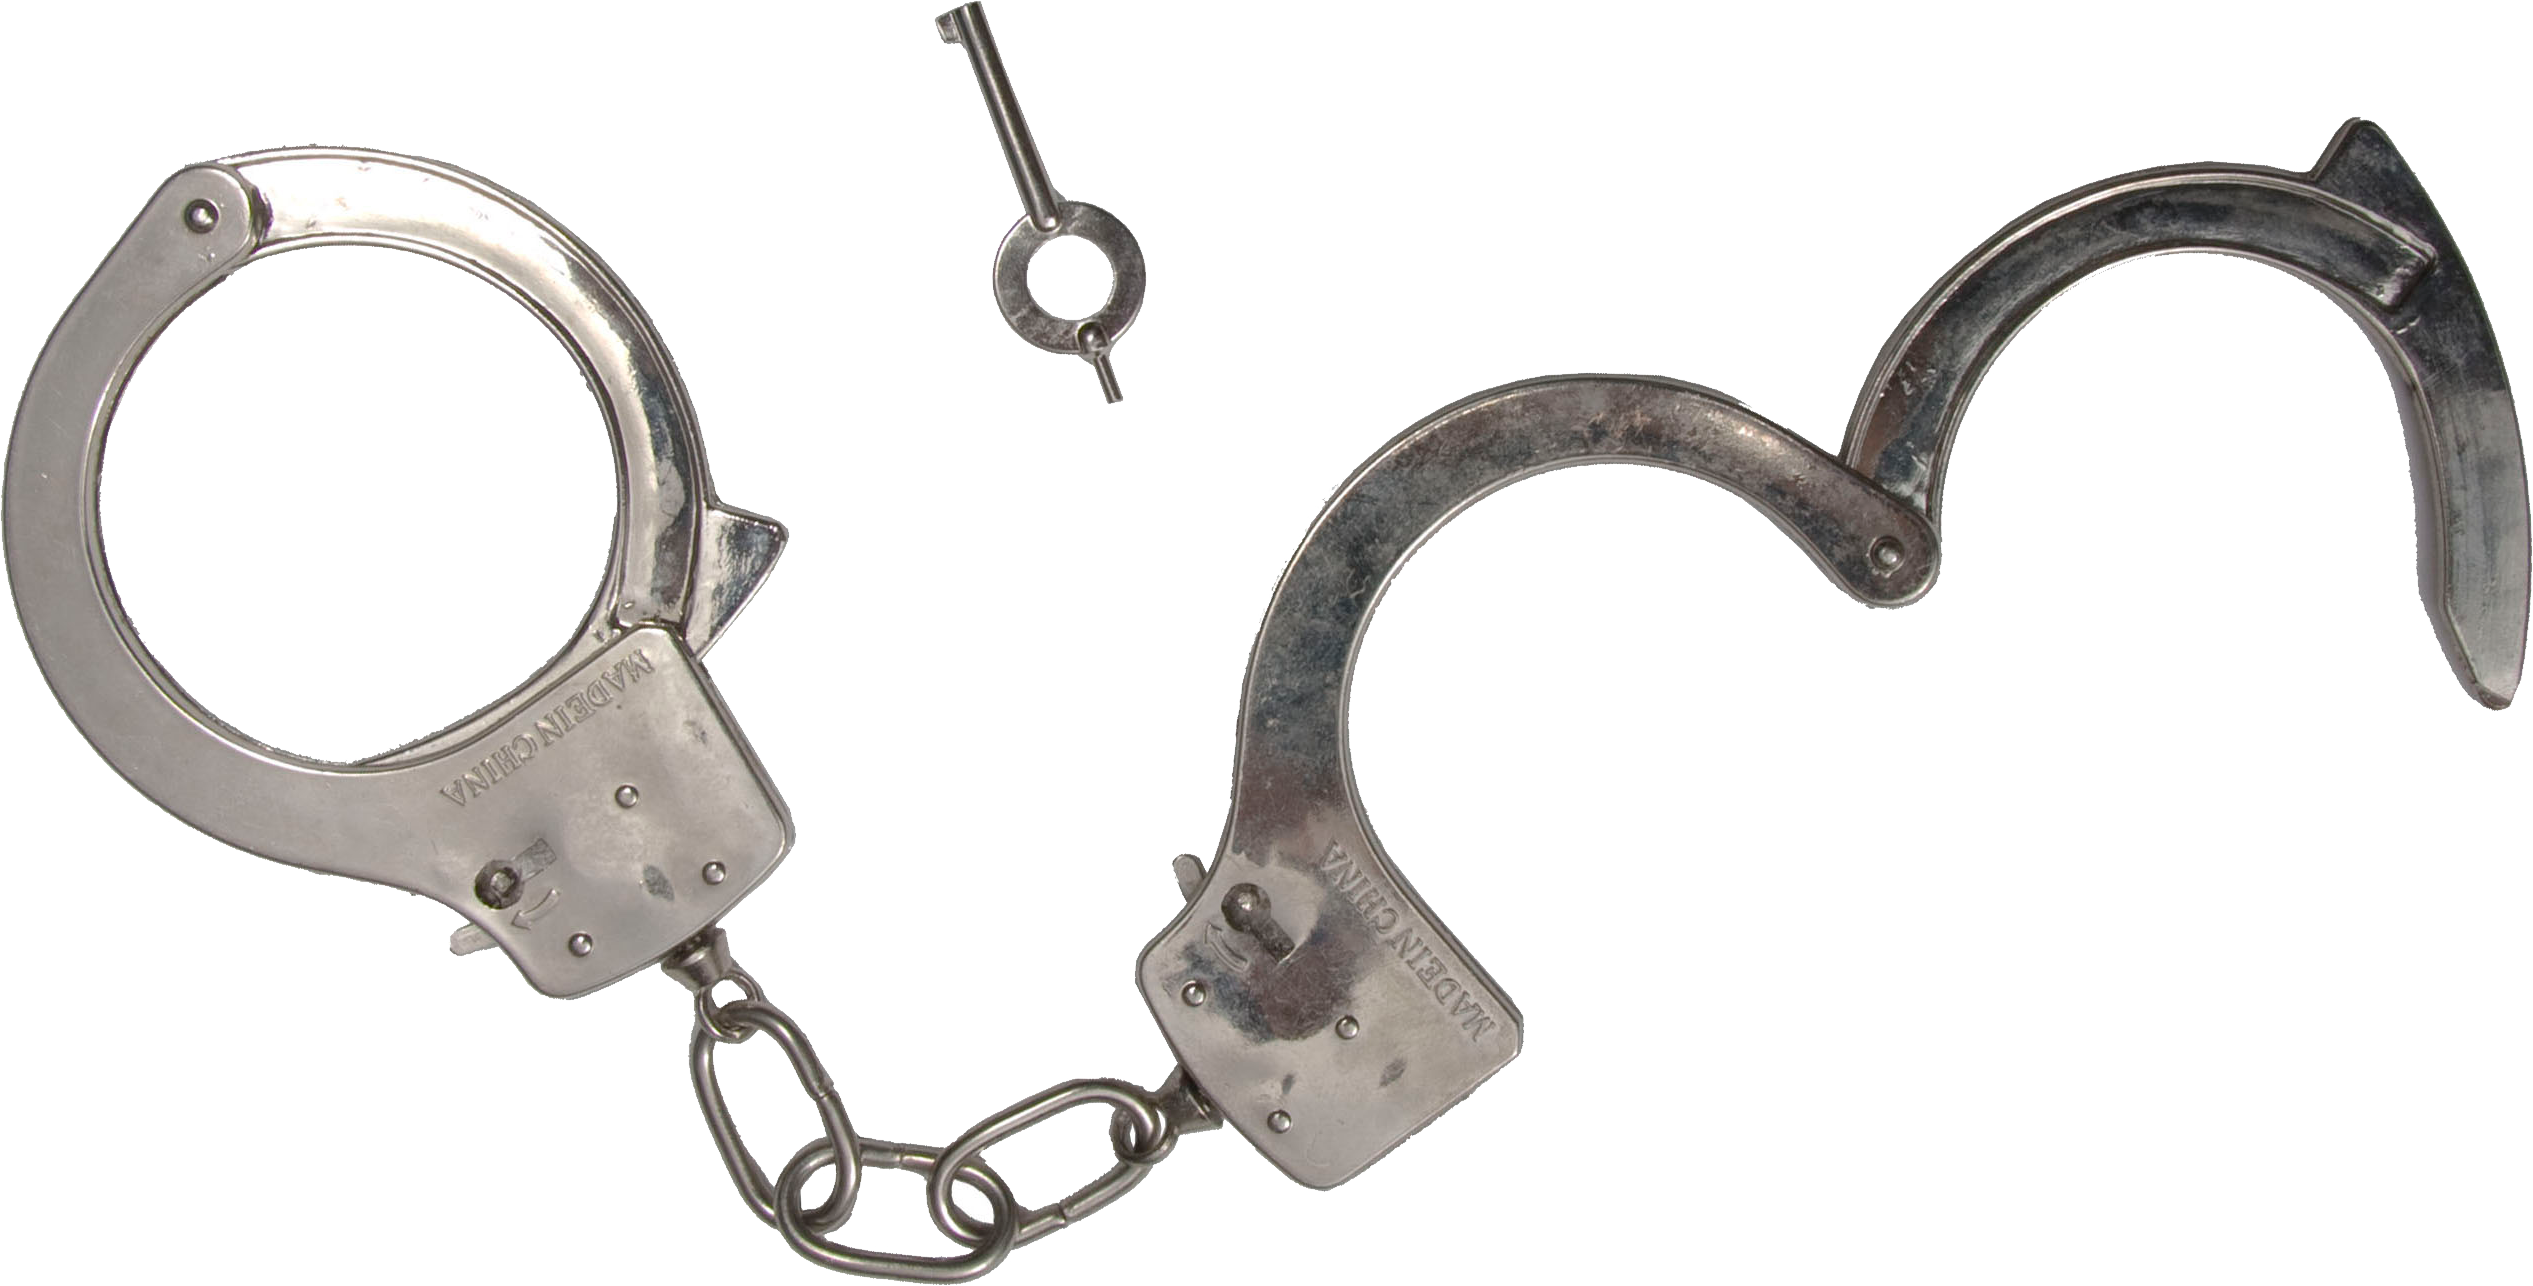 Handcuffs clipart handcuff key. Opened hand cuffs classic